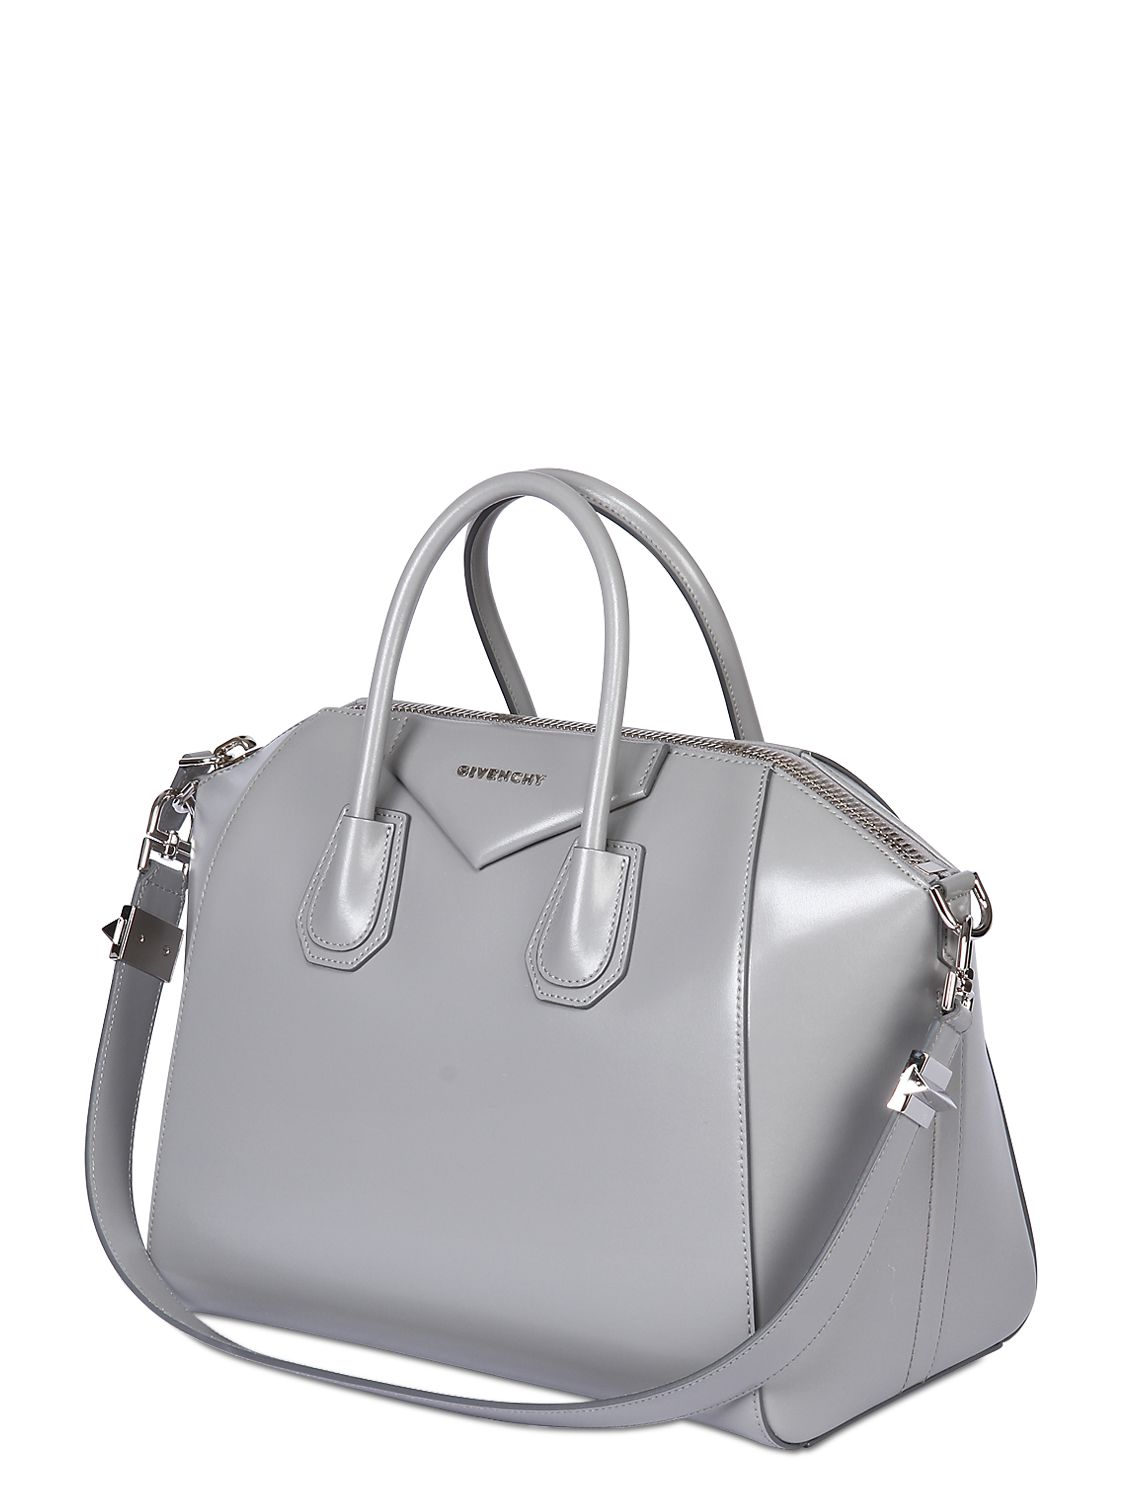 Givenchy Medium Antigona Shiny Smooth Leather Bag in Pearl Grey (Gray) - Lyst